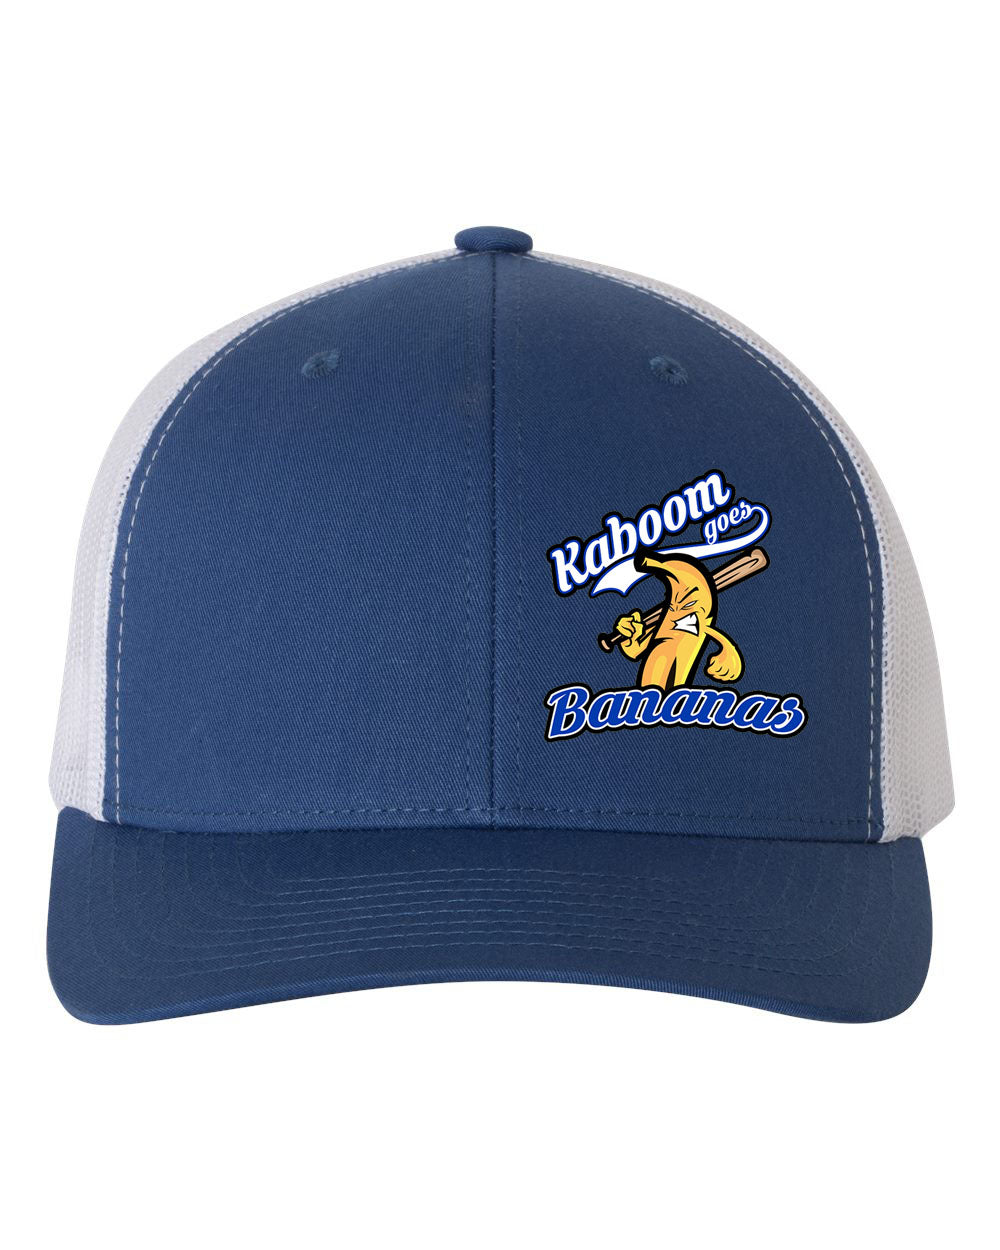 Kaboom goes bananas Trucker Hat